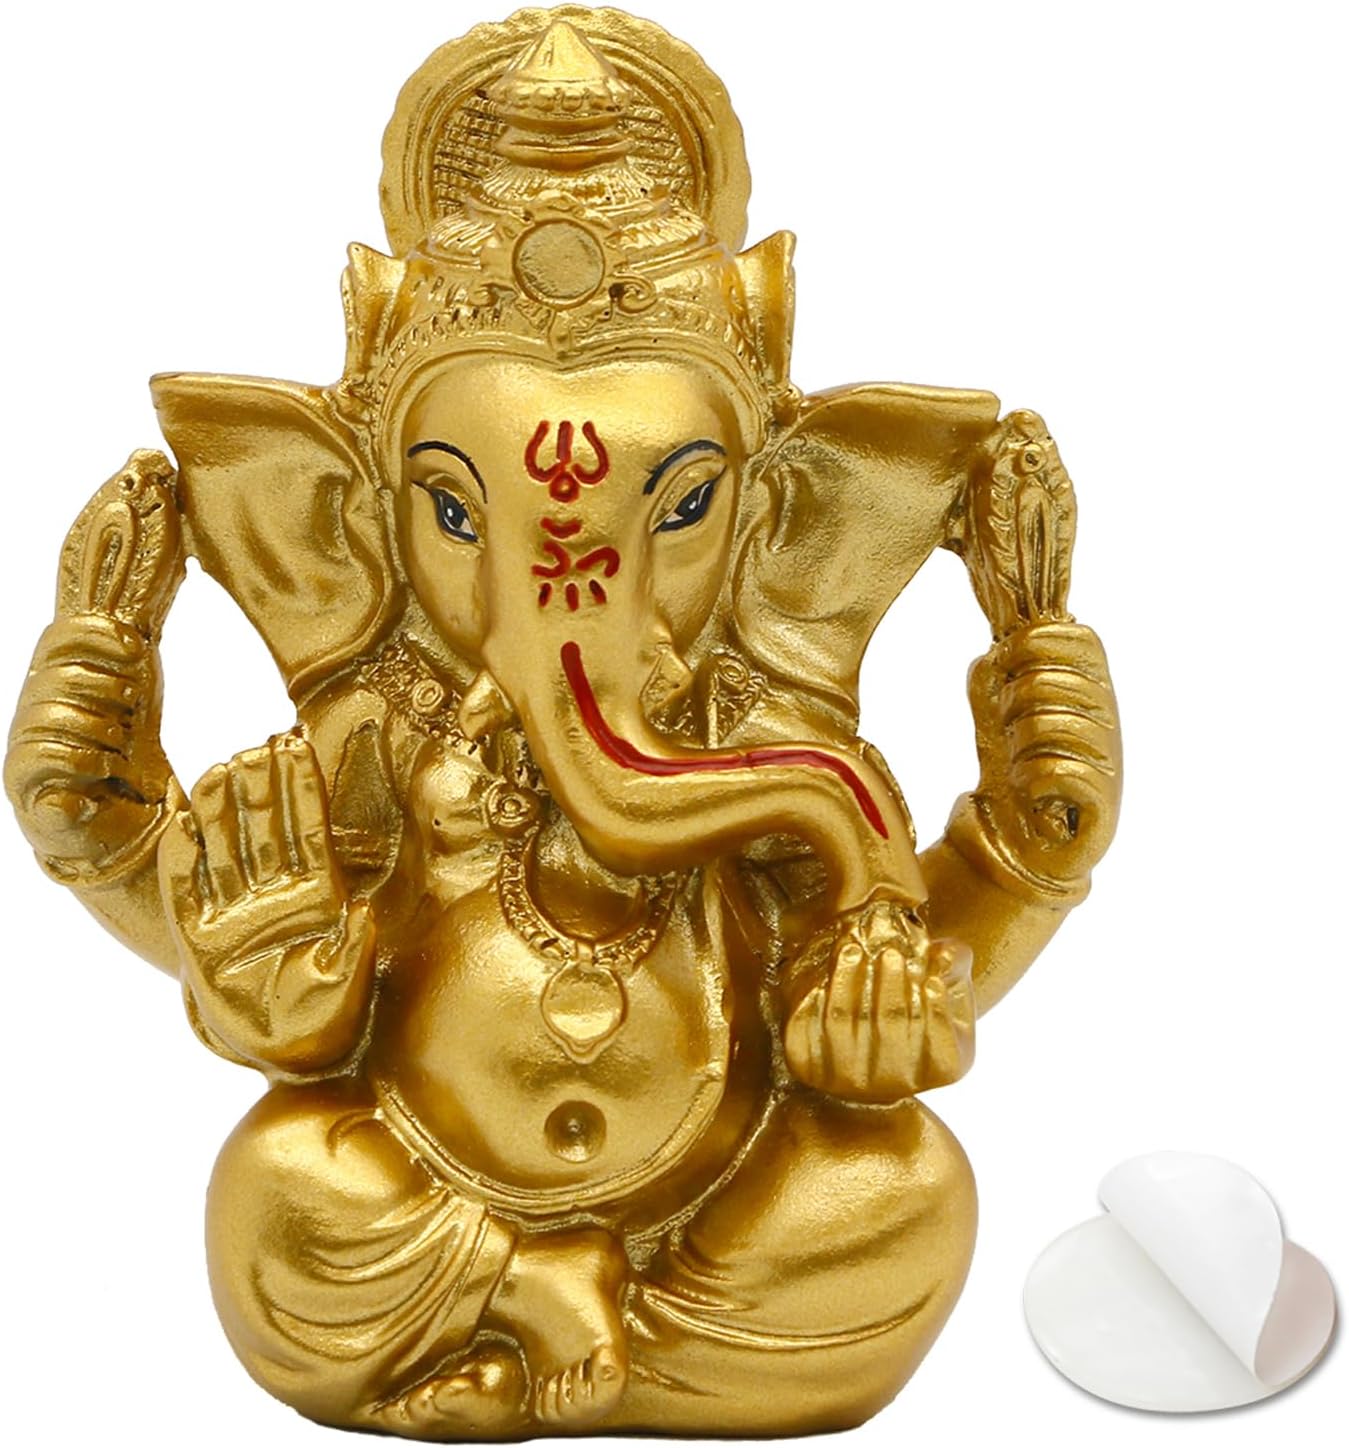 Indian God Lord Ganesh Statue - Hindu God Golden Ganesha Idol Figurines for Car Dashboard Decor Hindu Gift Indian India Home Temple Mandir Pooja Item Diwali Gifts Room Altar Decor